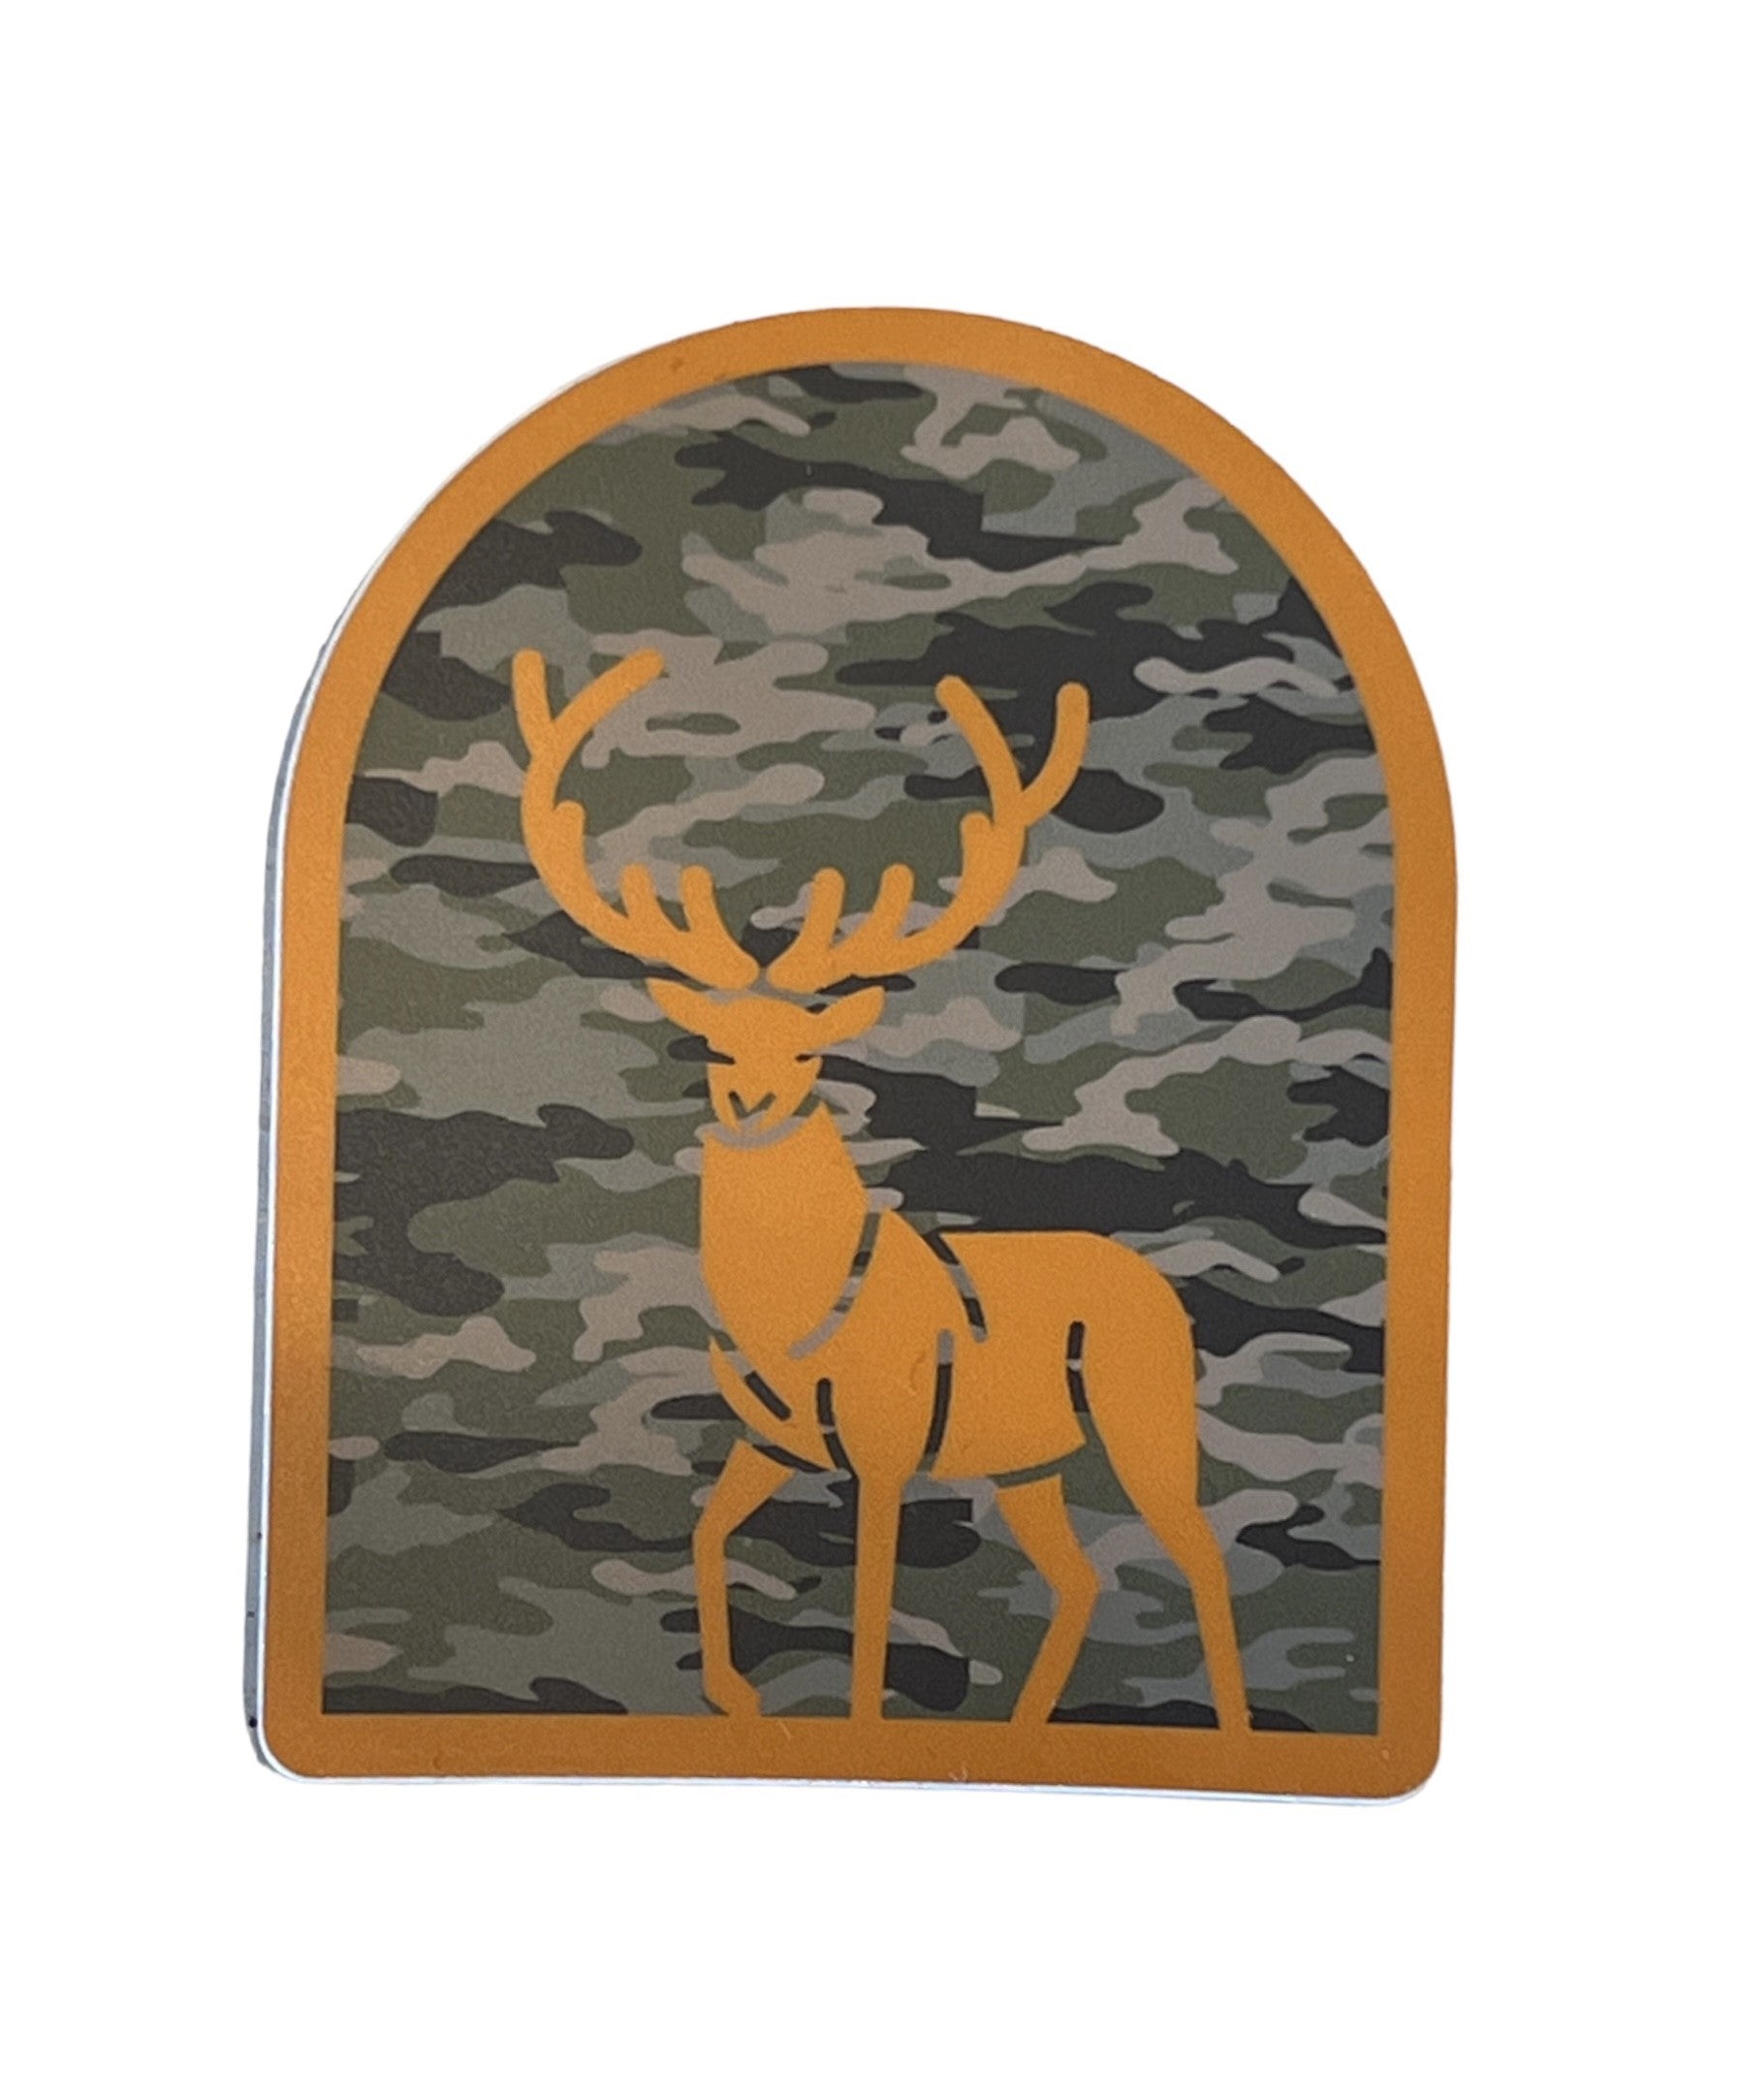 Camo Orange Deer Sticker